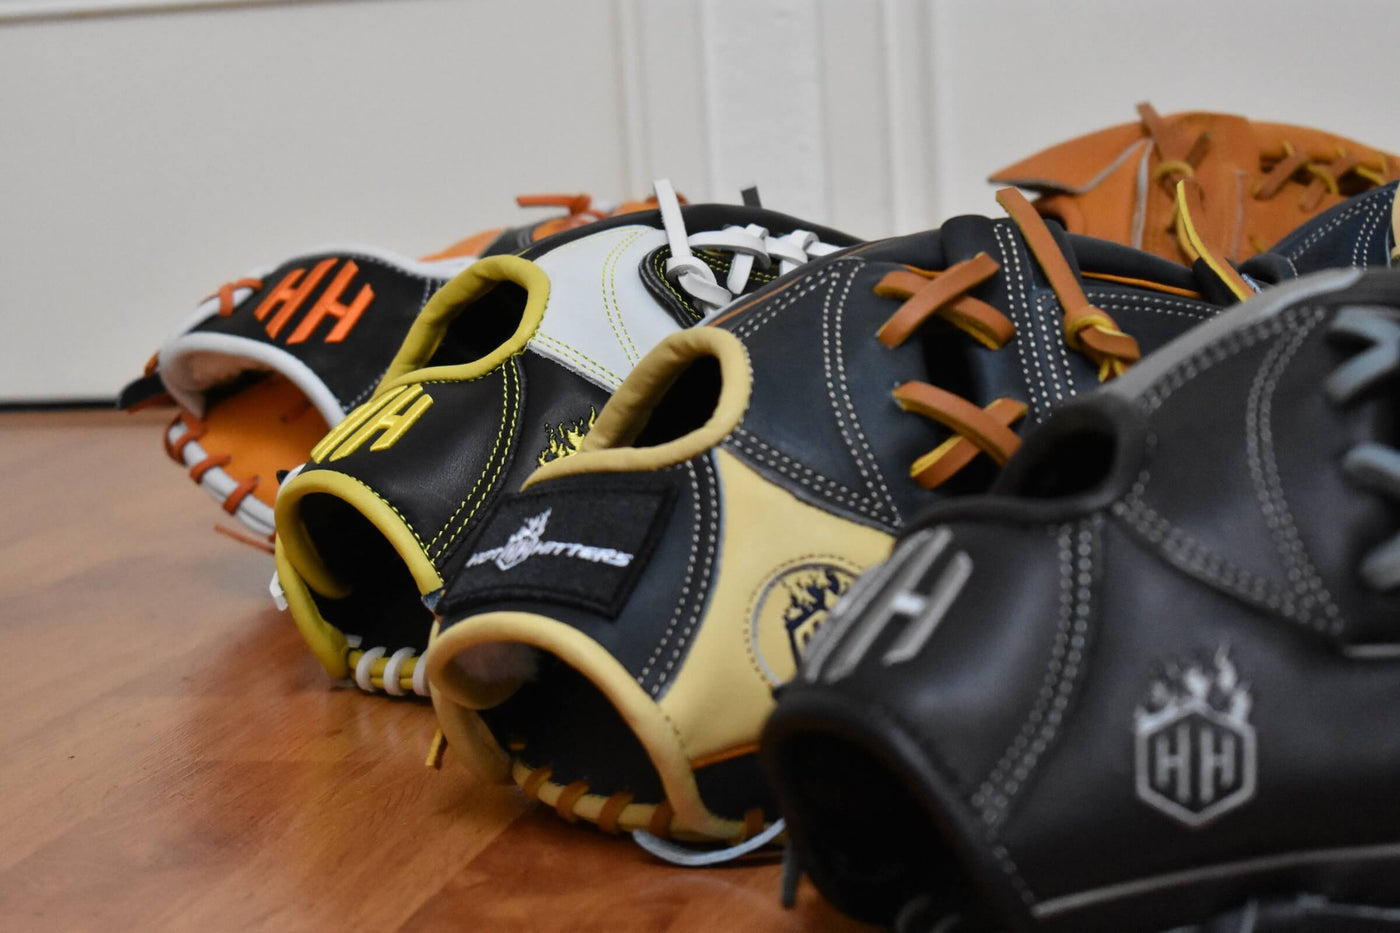 hot hitter baseball softball fielding mitts gloves guide choose best